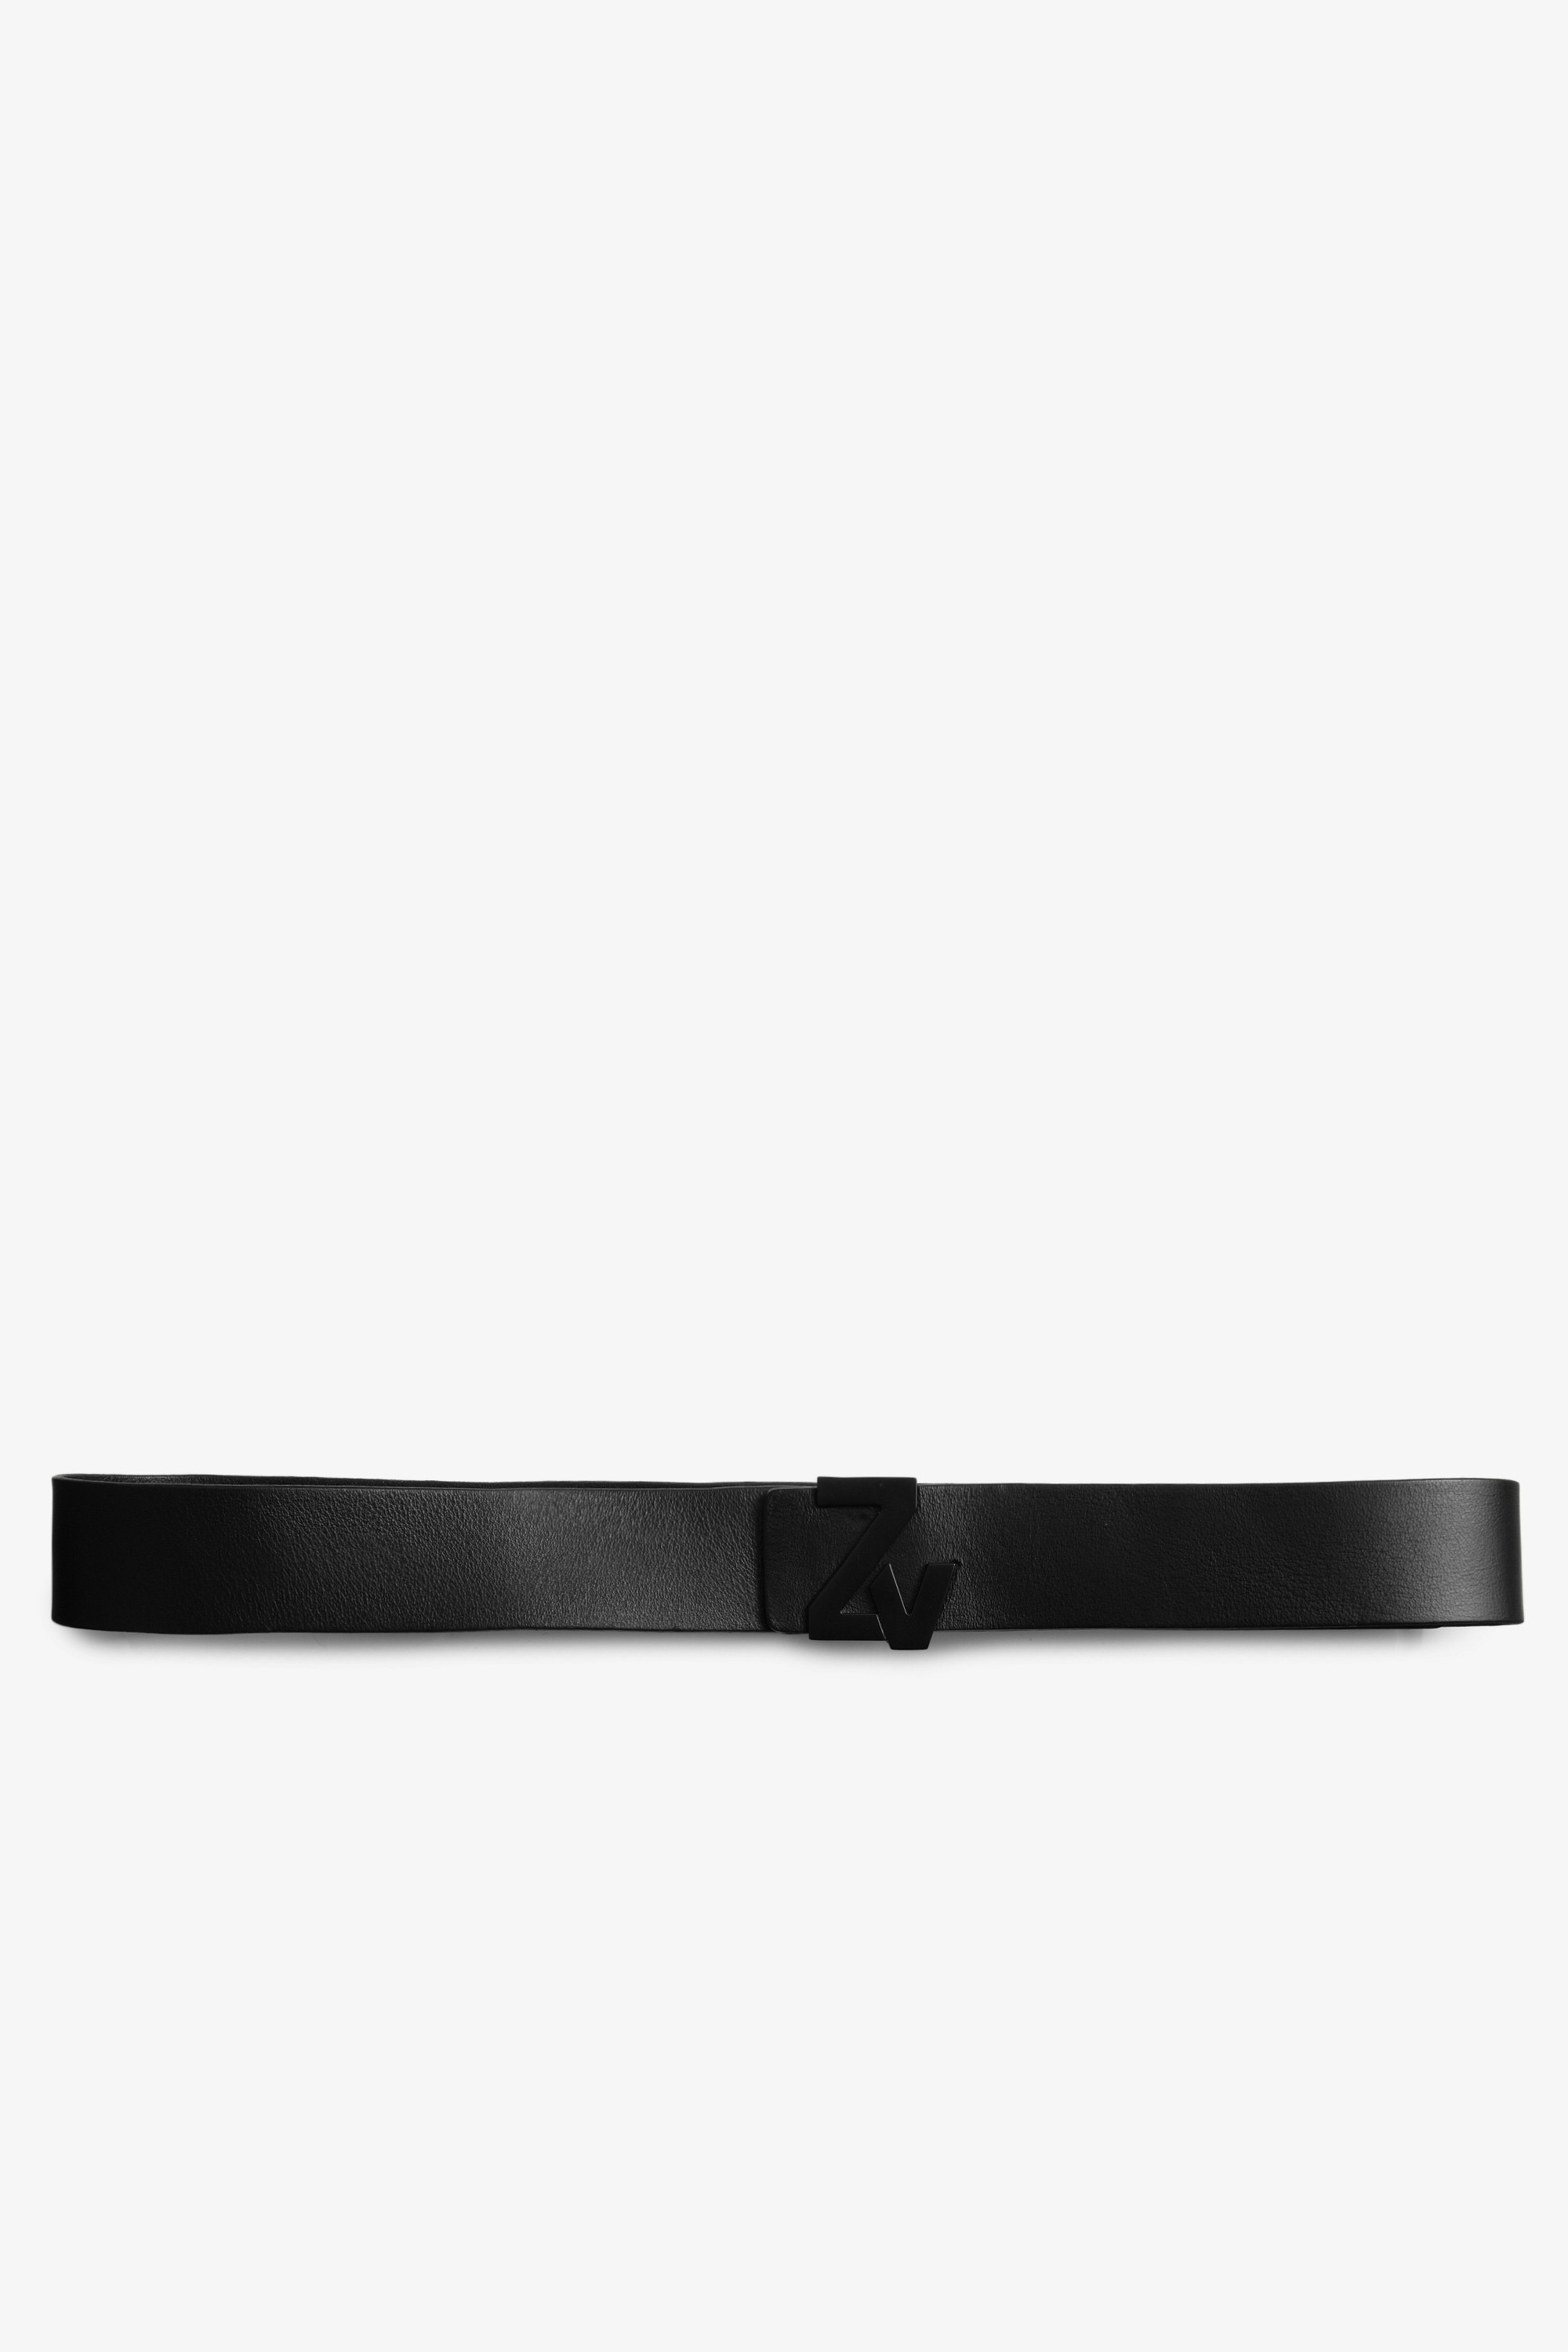 Cintura ZV Initiale La Belt Pelle - Cintura in pelle nera con fibbia ZV uomo